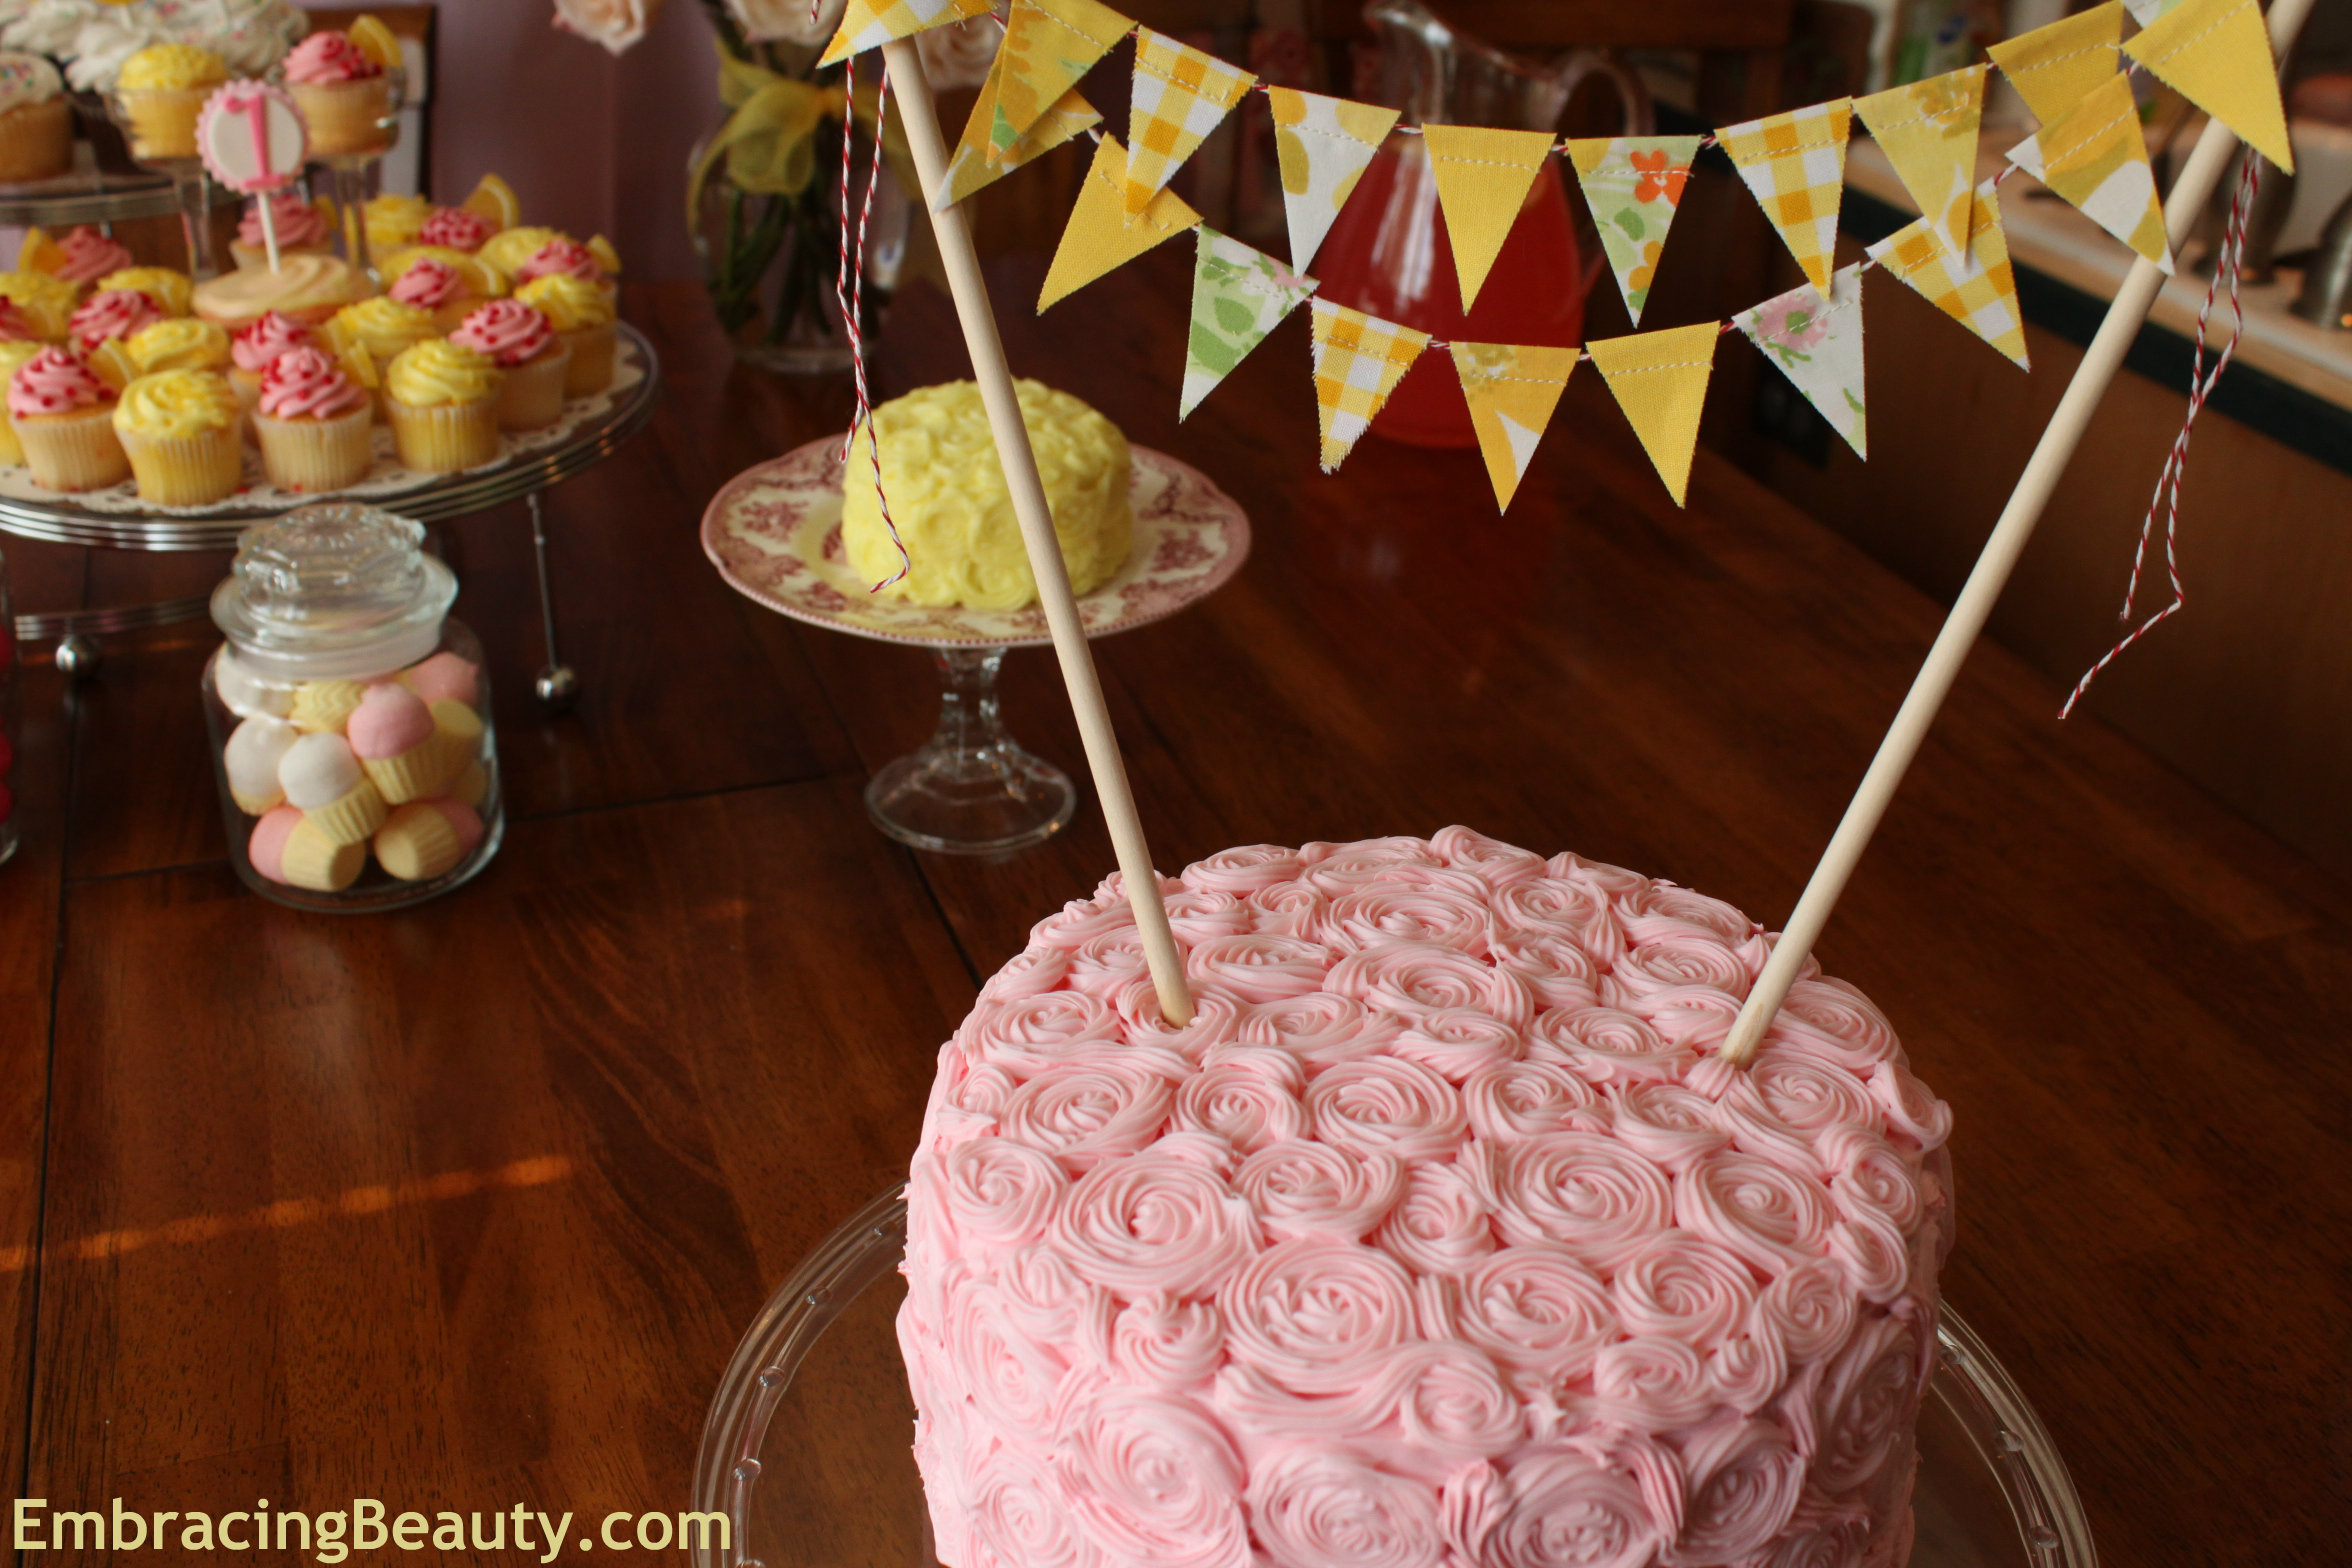 https://embracingbeauty.com/wp-content/uploads/2012/09/Pink-Lemonade-Birthday-Cake.jpg